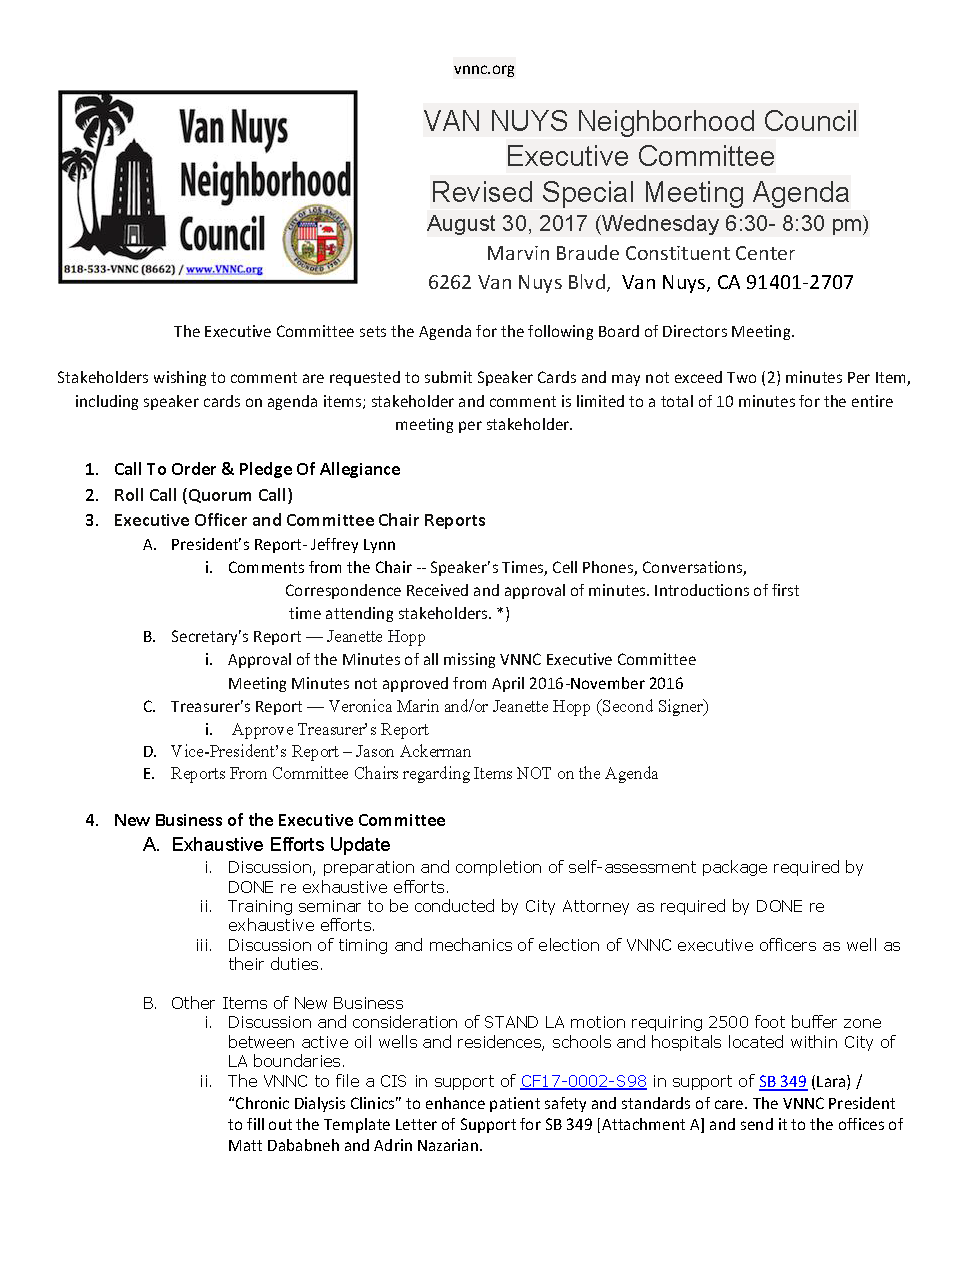 Van Nuys Neighborhood Council Executive Committee Agenda Revised ... ميكرويف دايو